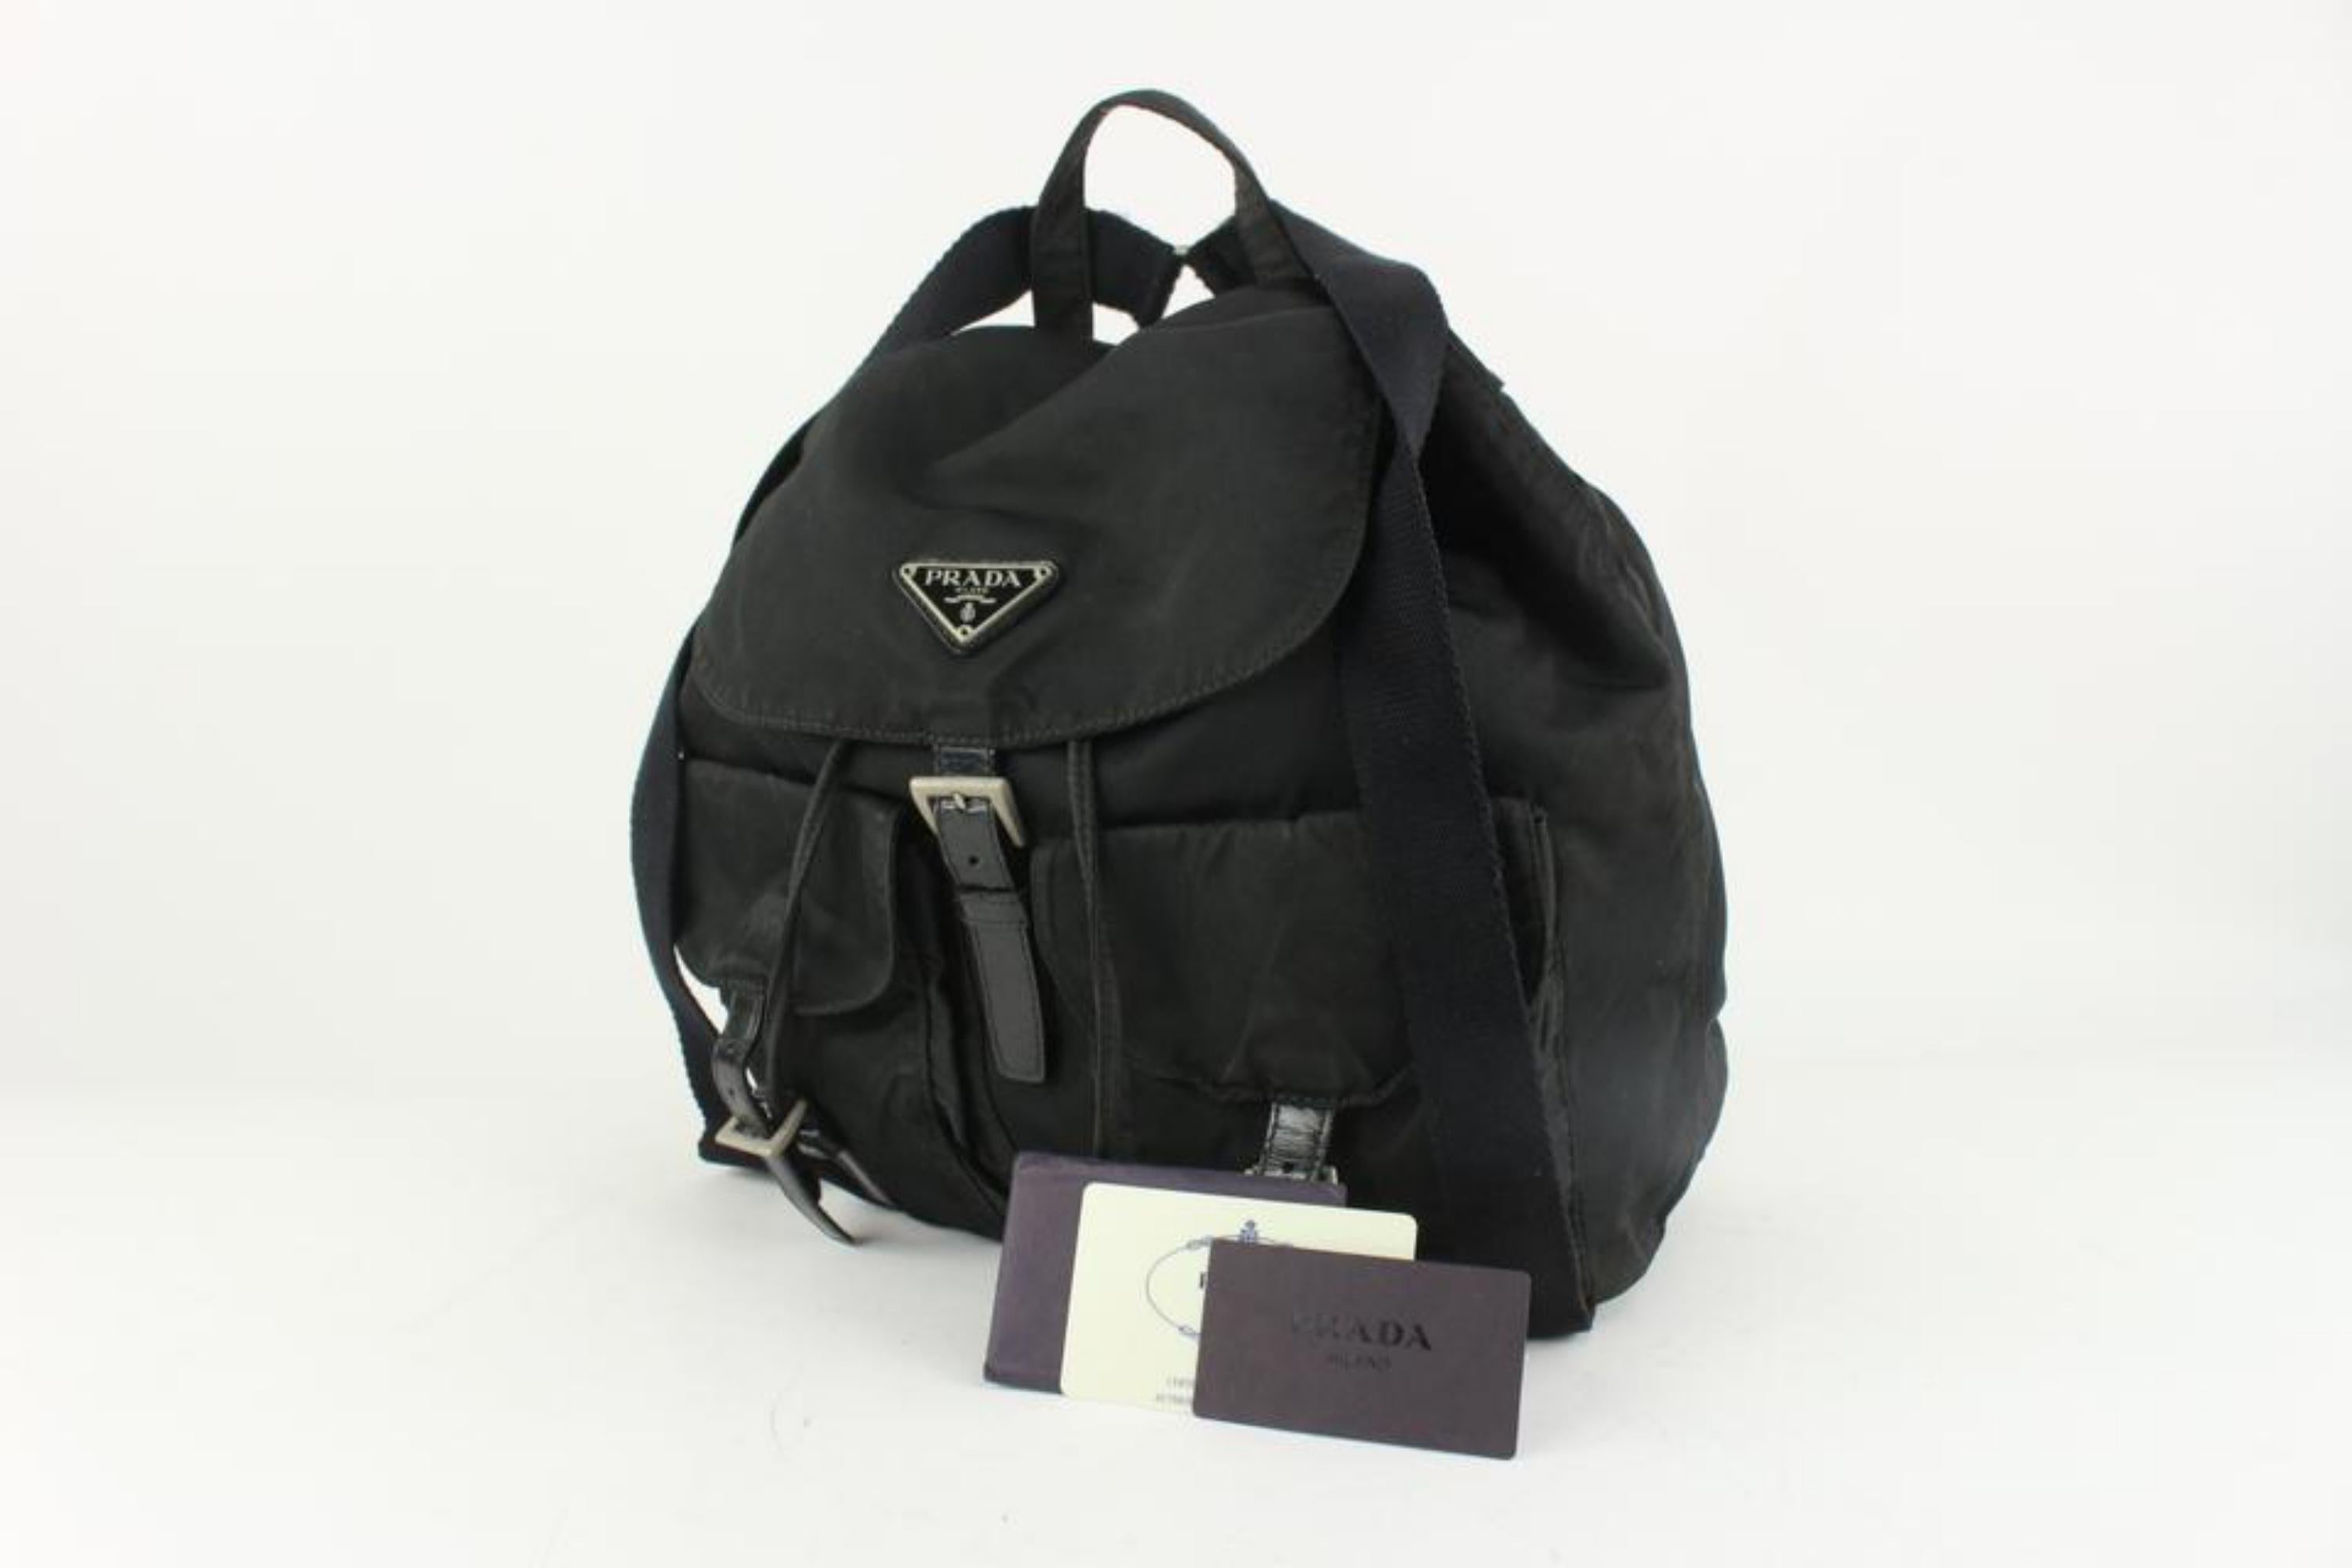 Prada Black Nylon Tessuto Twin Pocket Backpack 1216p31
Date Code/Serial Number: 50
Made In: Italy
Measurements: Length:  16